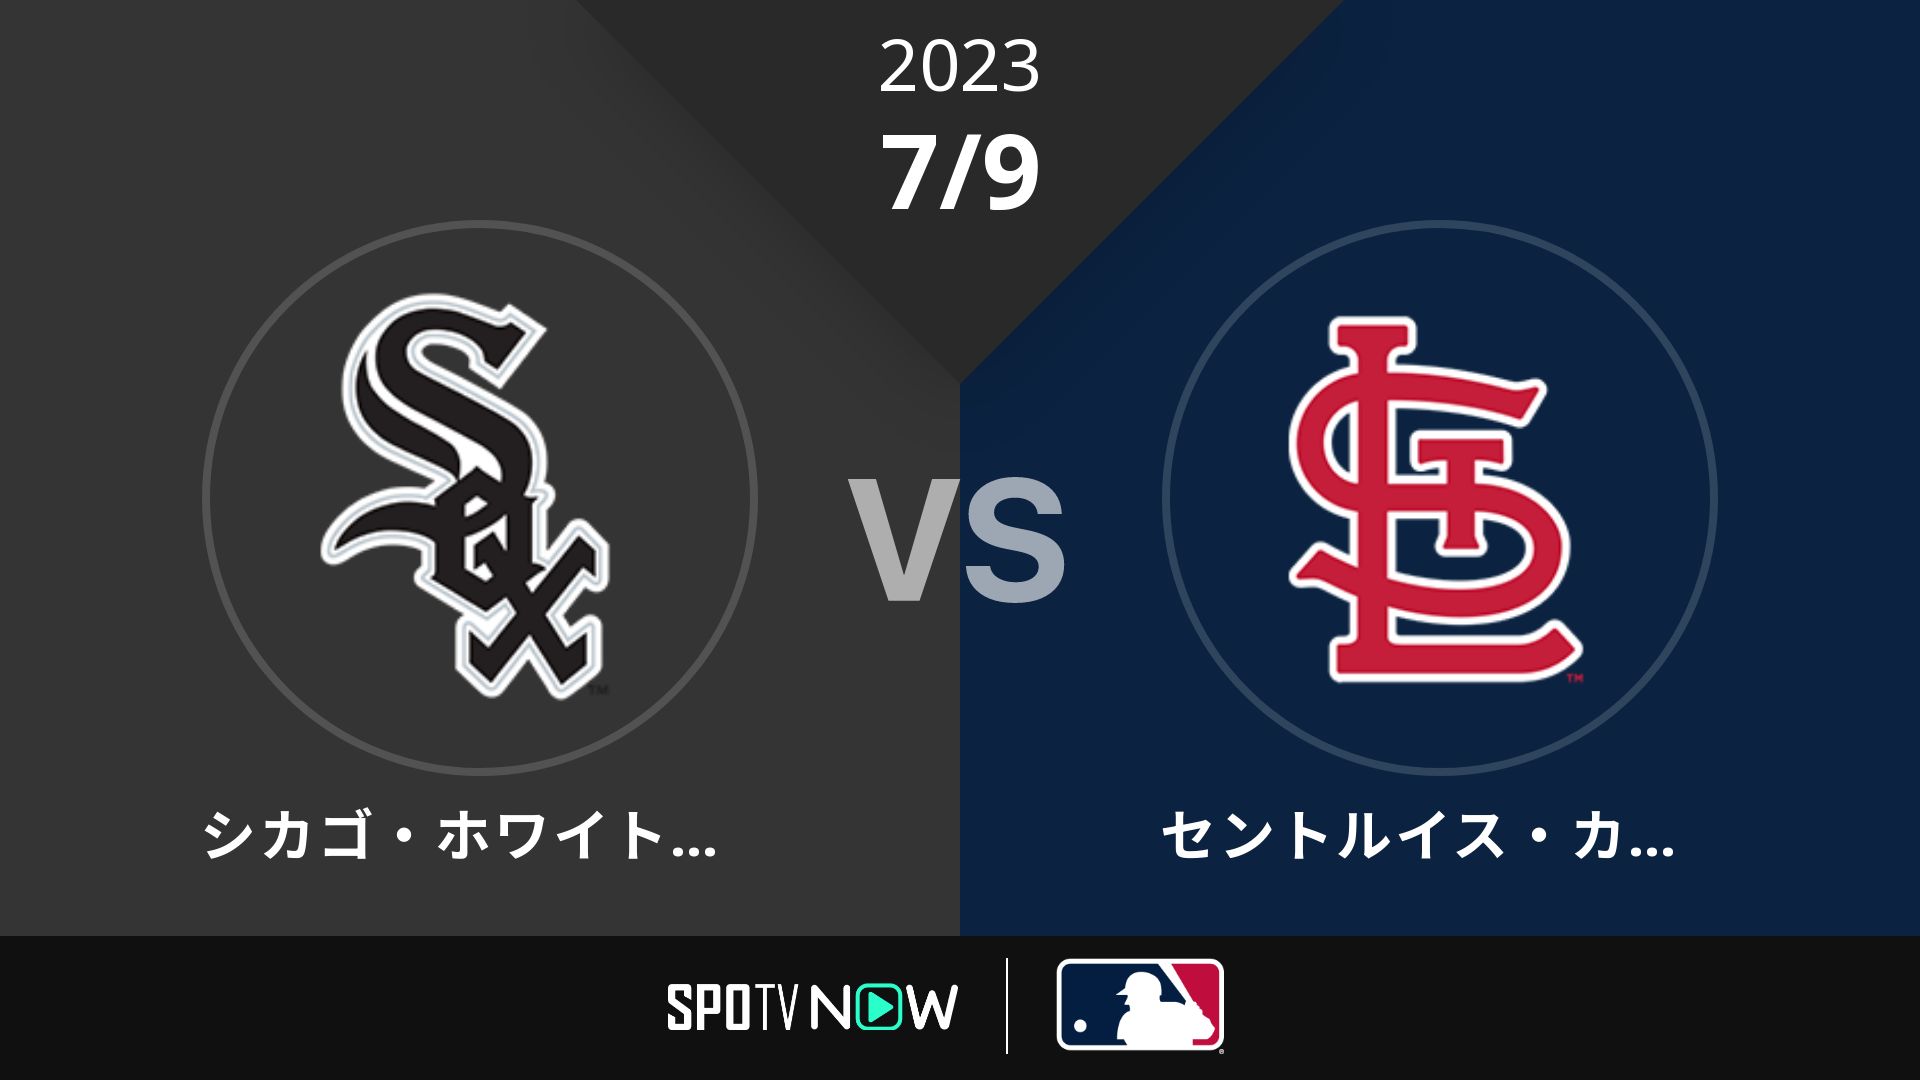 2023/7/9 Wソックス vs カージナルス [MLB]